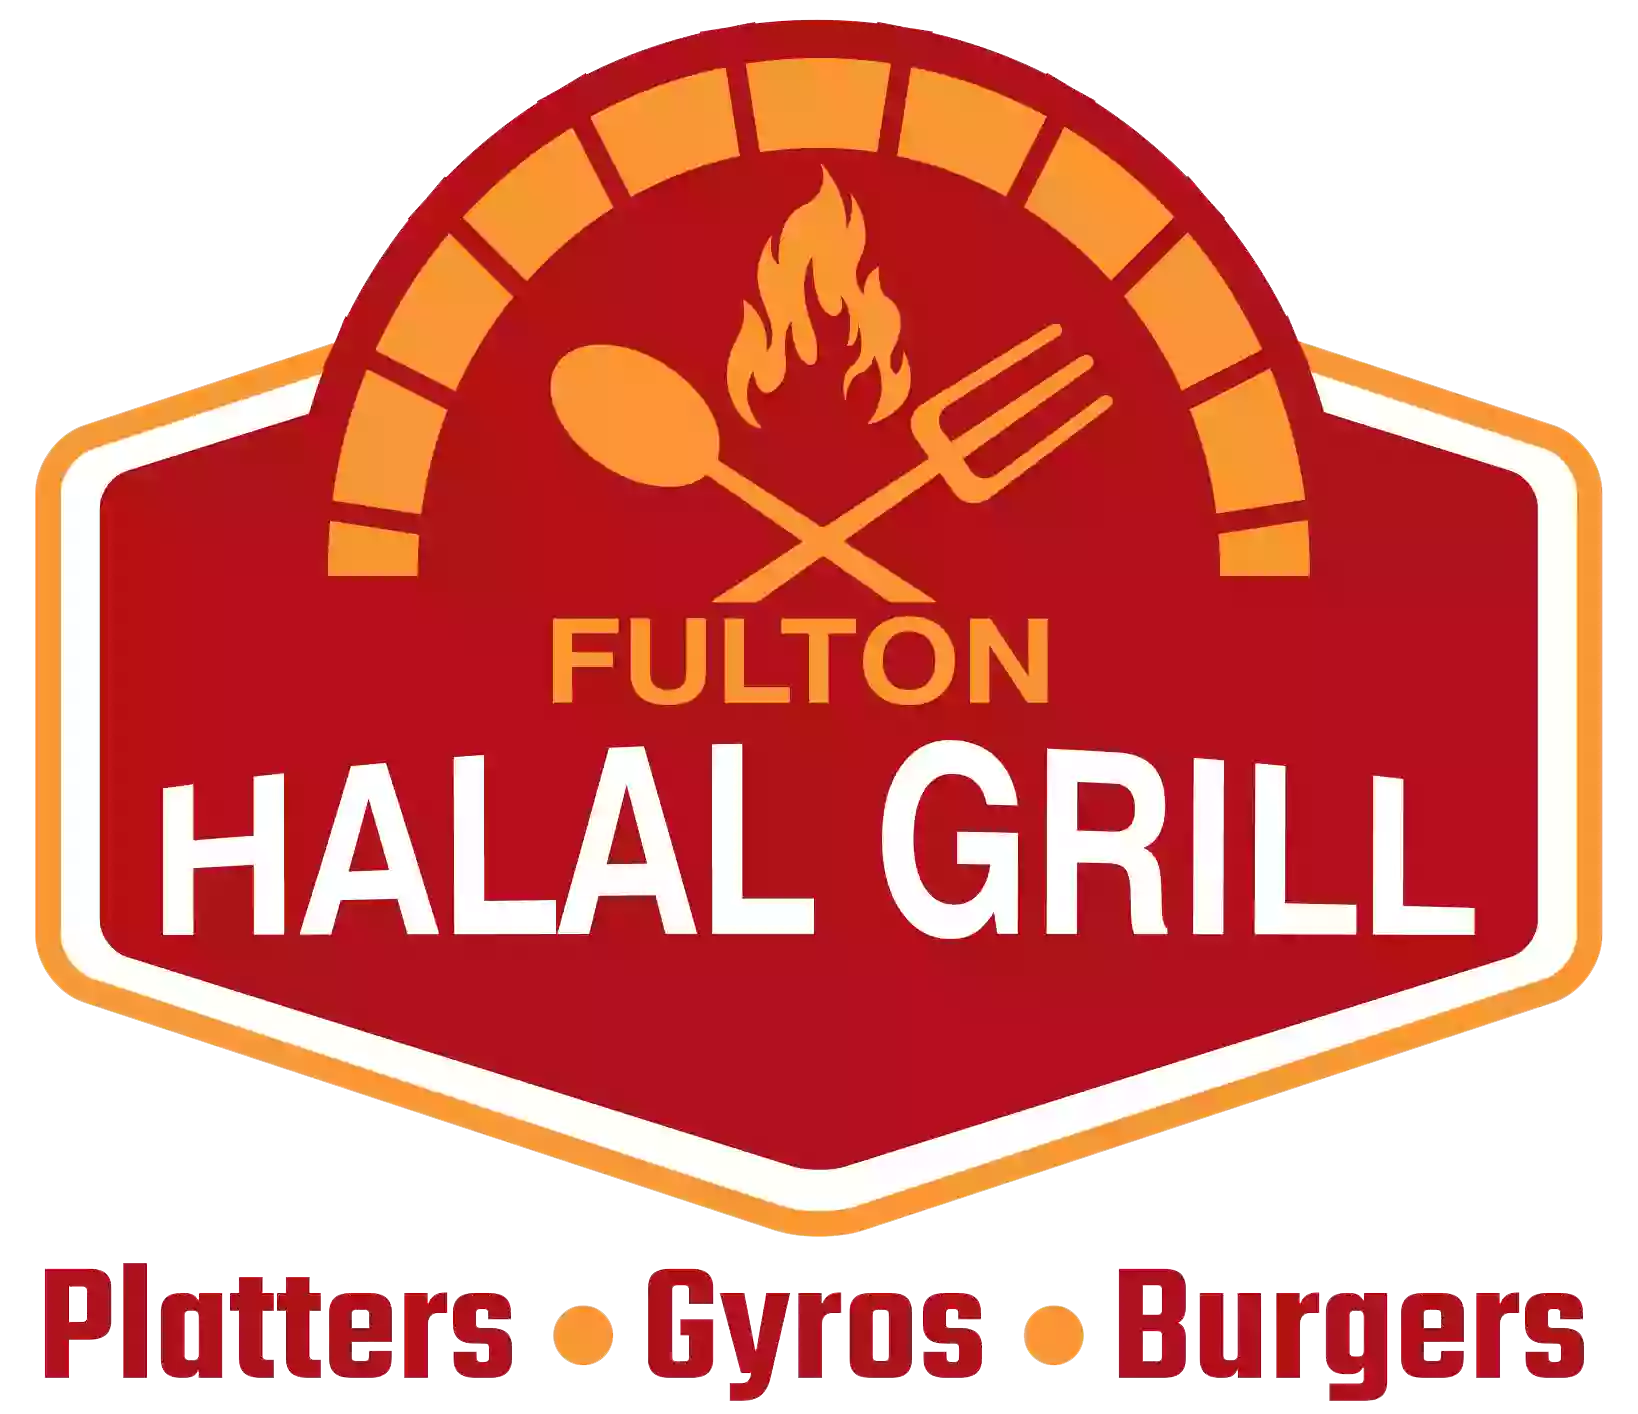 FULTON HALAL GRILL